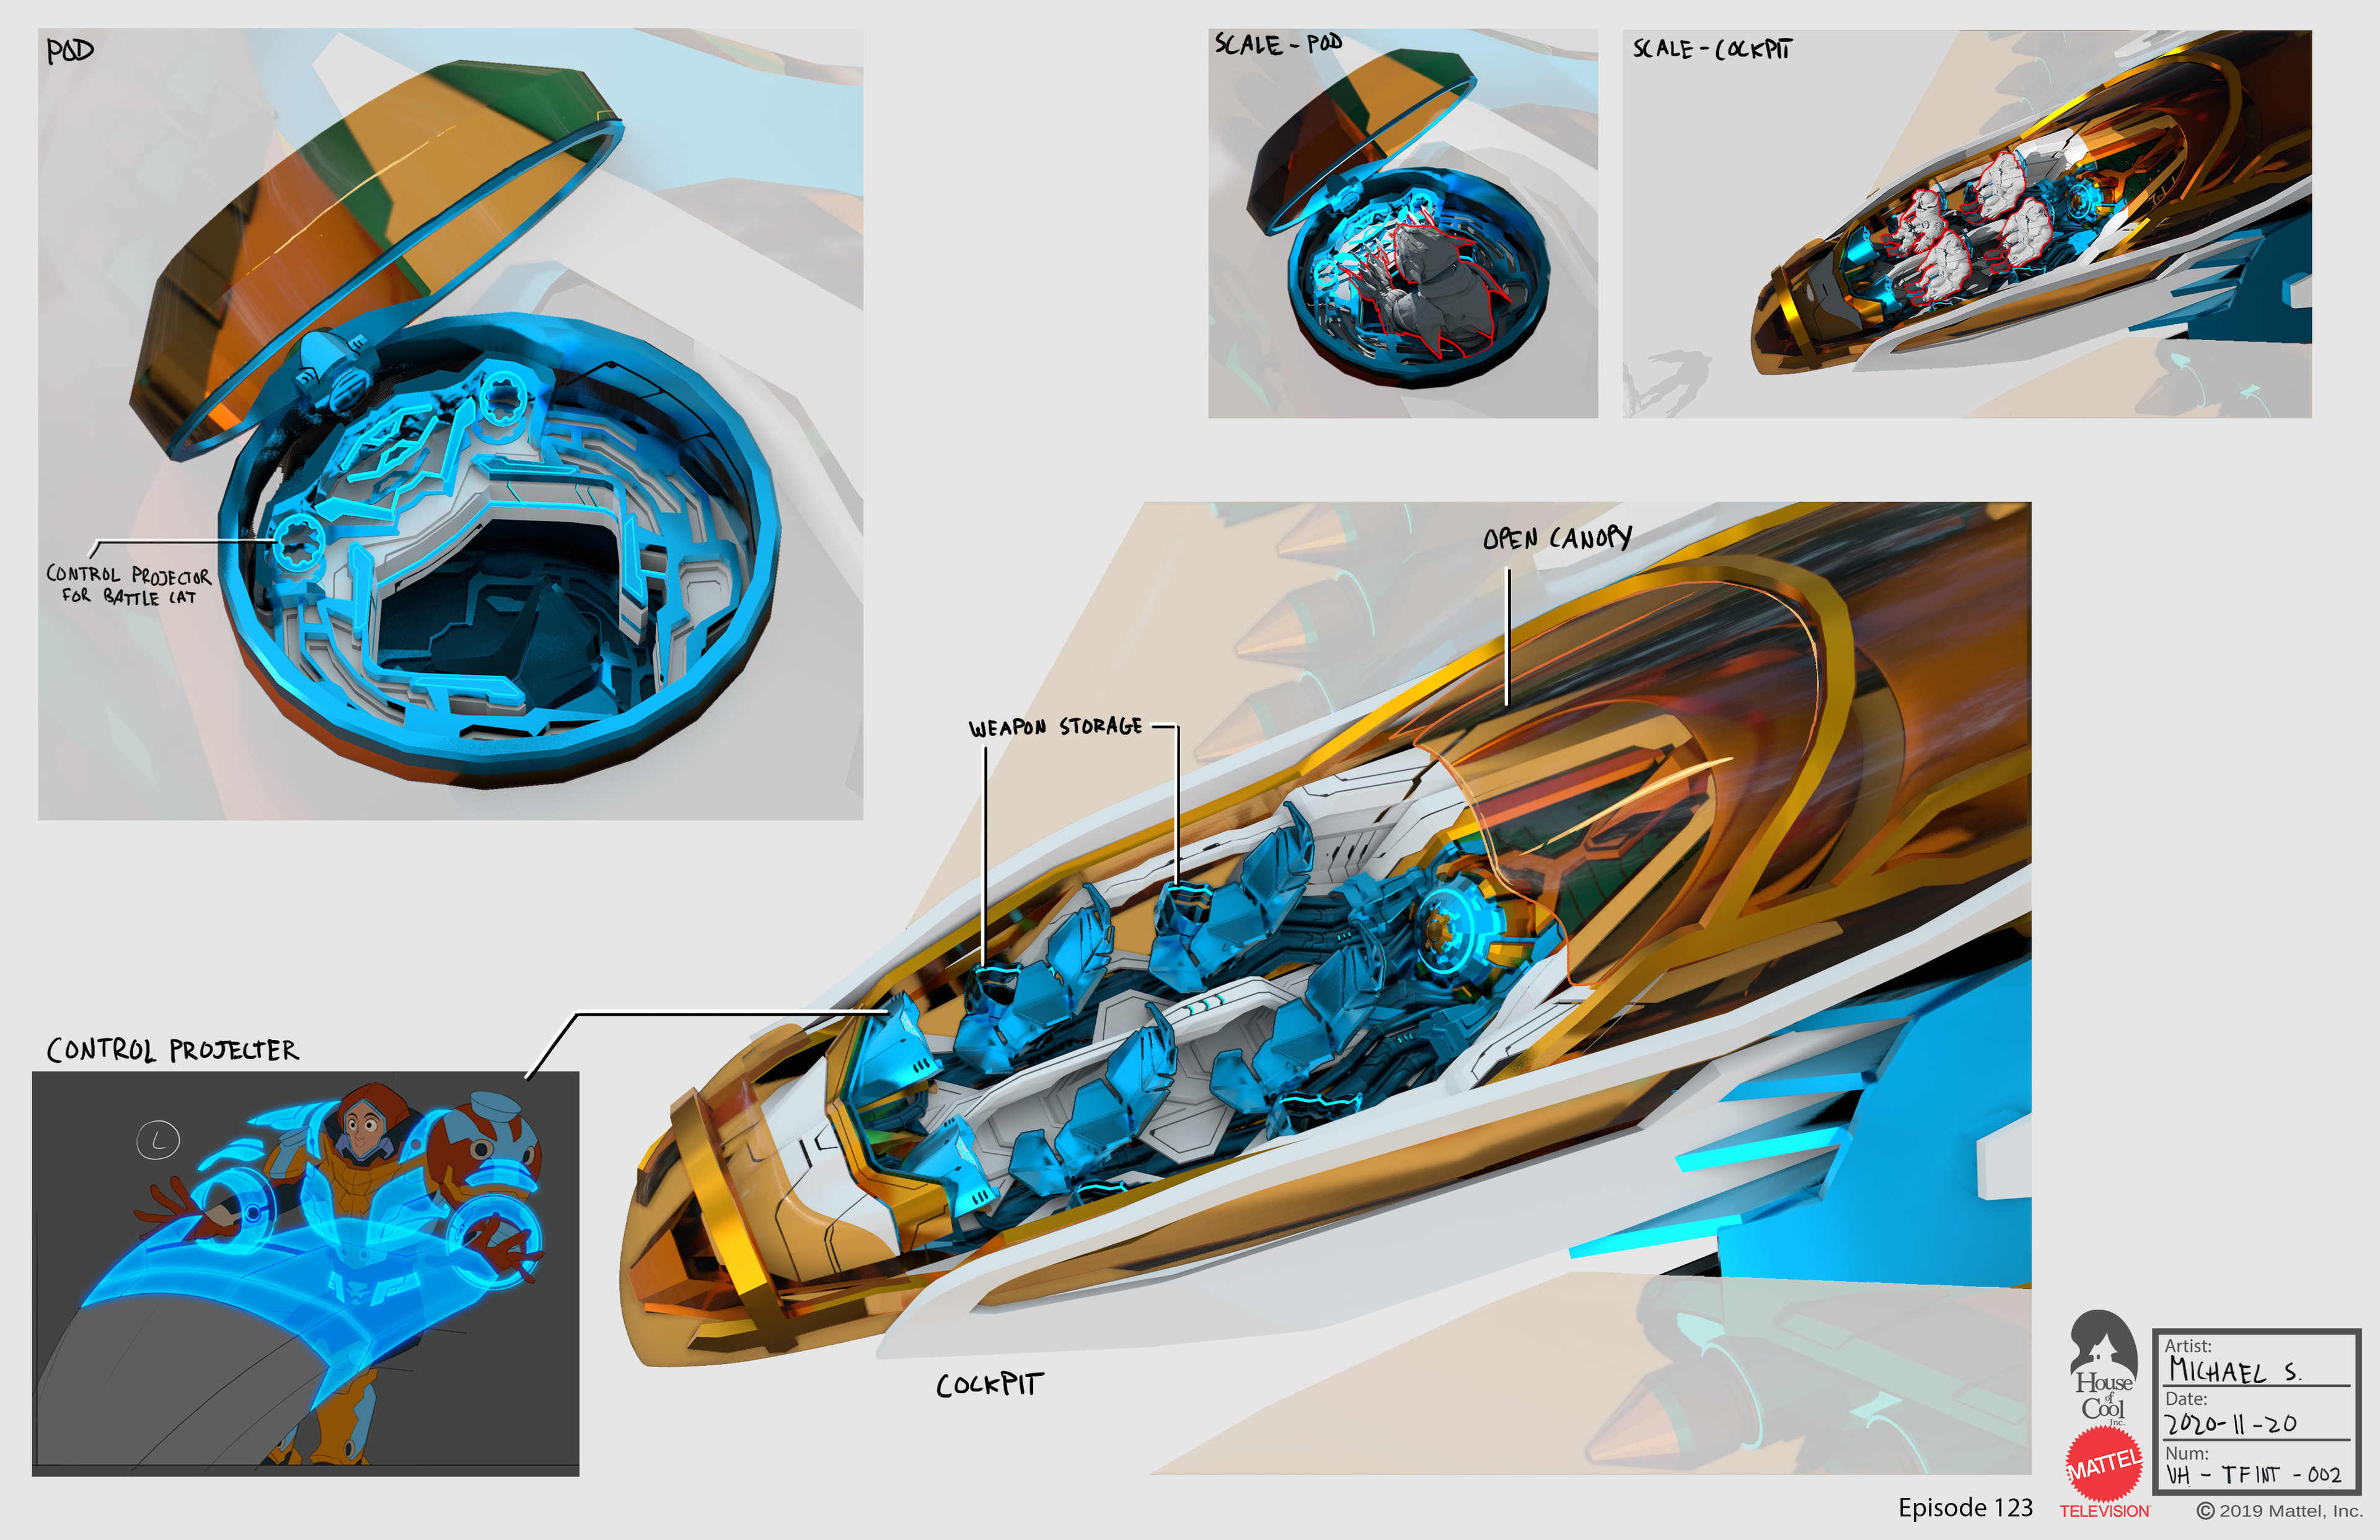 Talon Fighter Interior - Hologram design by Edric Daguio